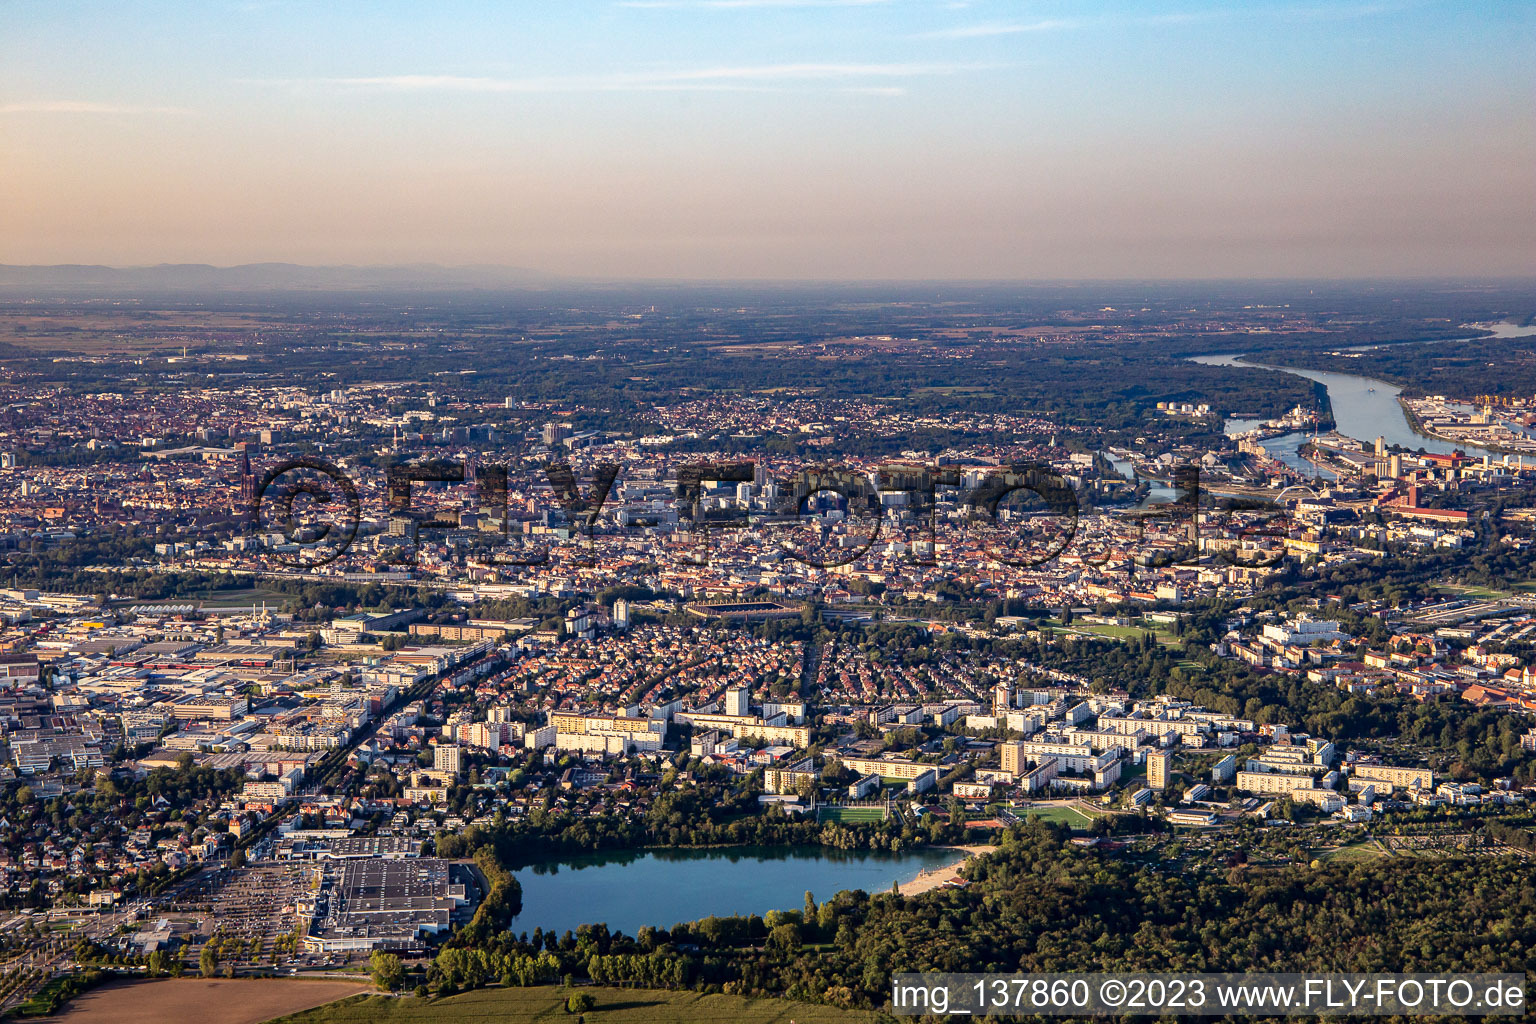 Luftbild von LE BAGGERSEE im Ortsteil Canardière in Straßburg im Bundesland Bas-Rhin, Frankreich